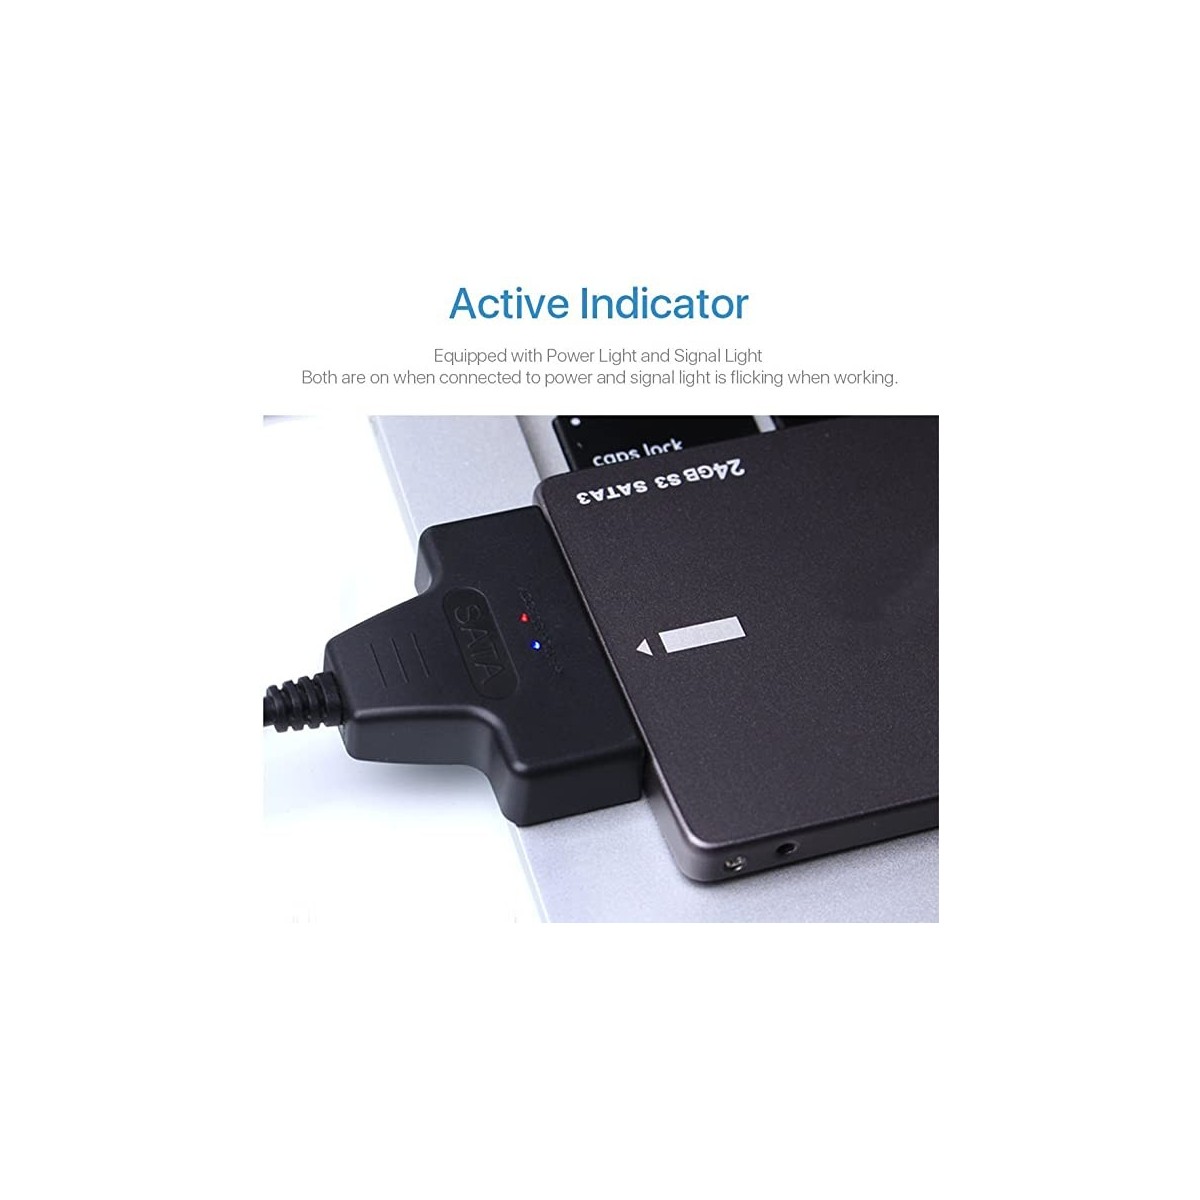 Adaptateur Type-C SATA 2.5 SSD-HDD BLEU